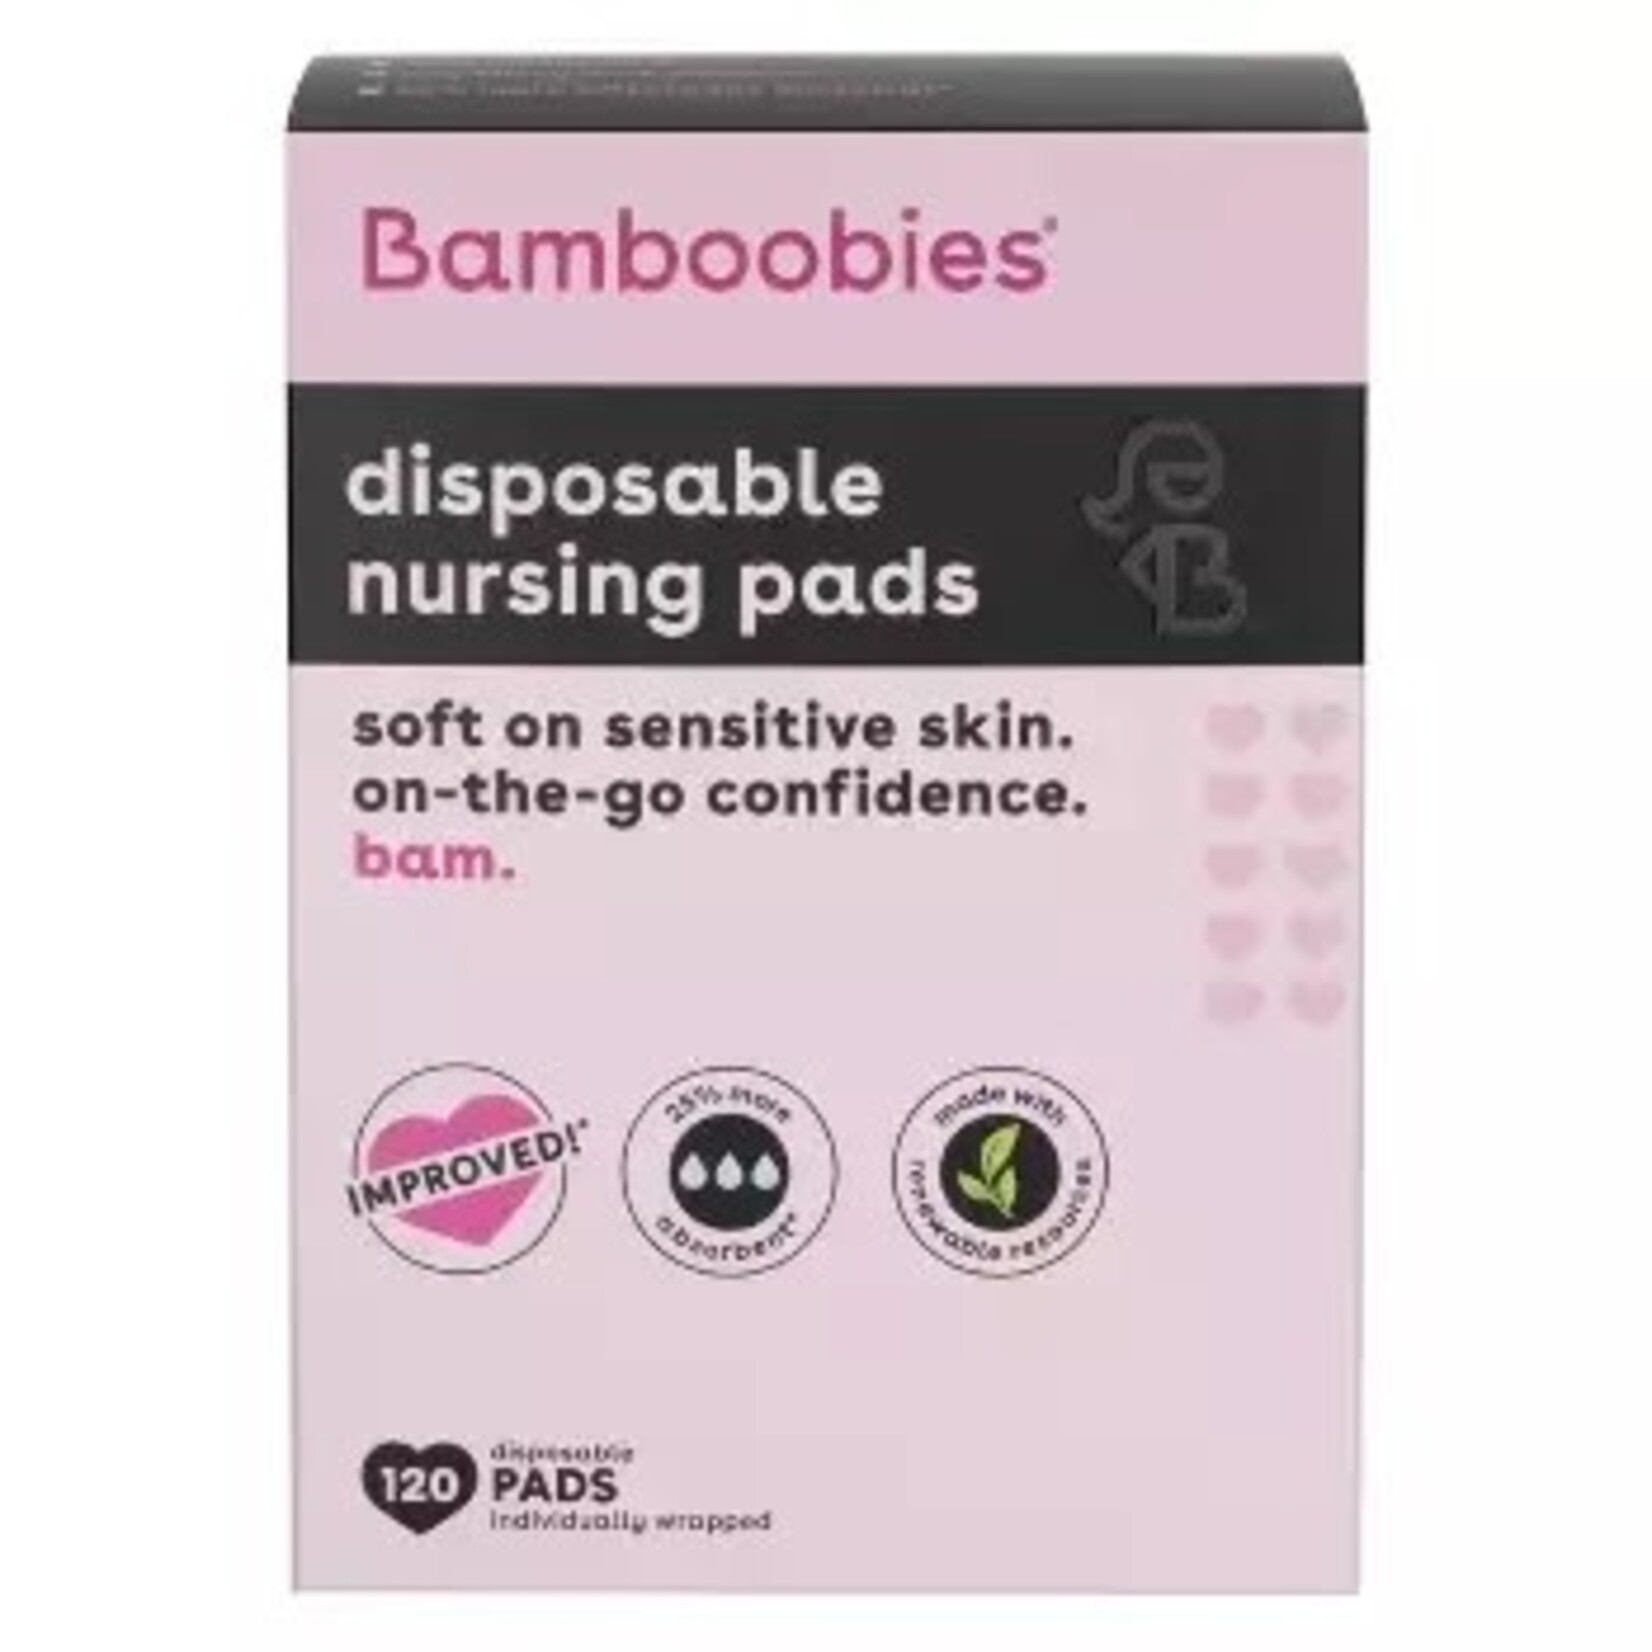 Bamboobies Disposable Nursing Pads - 120 pads